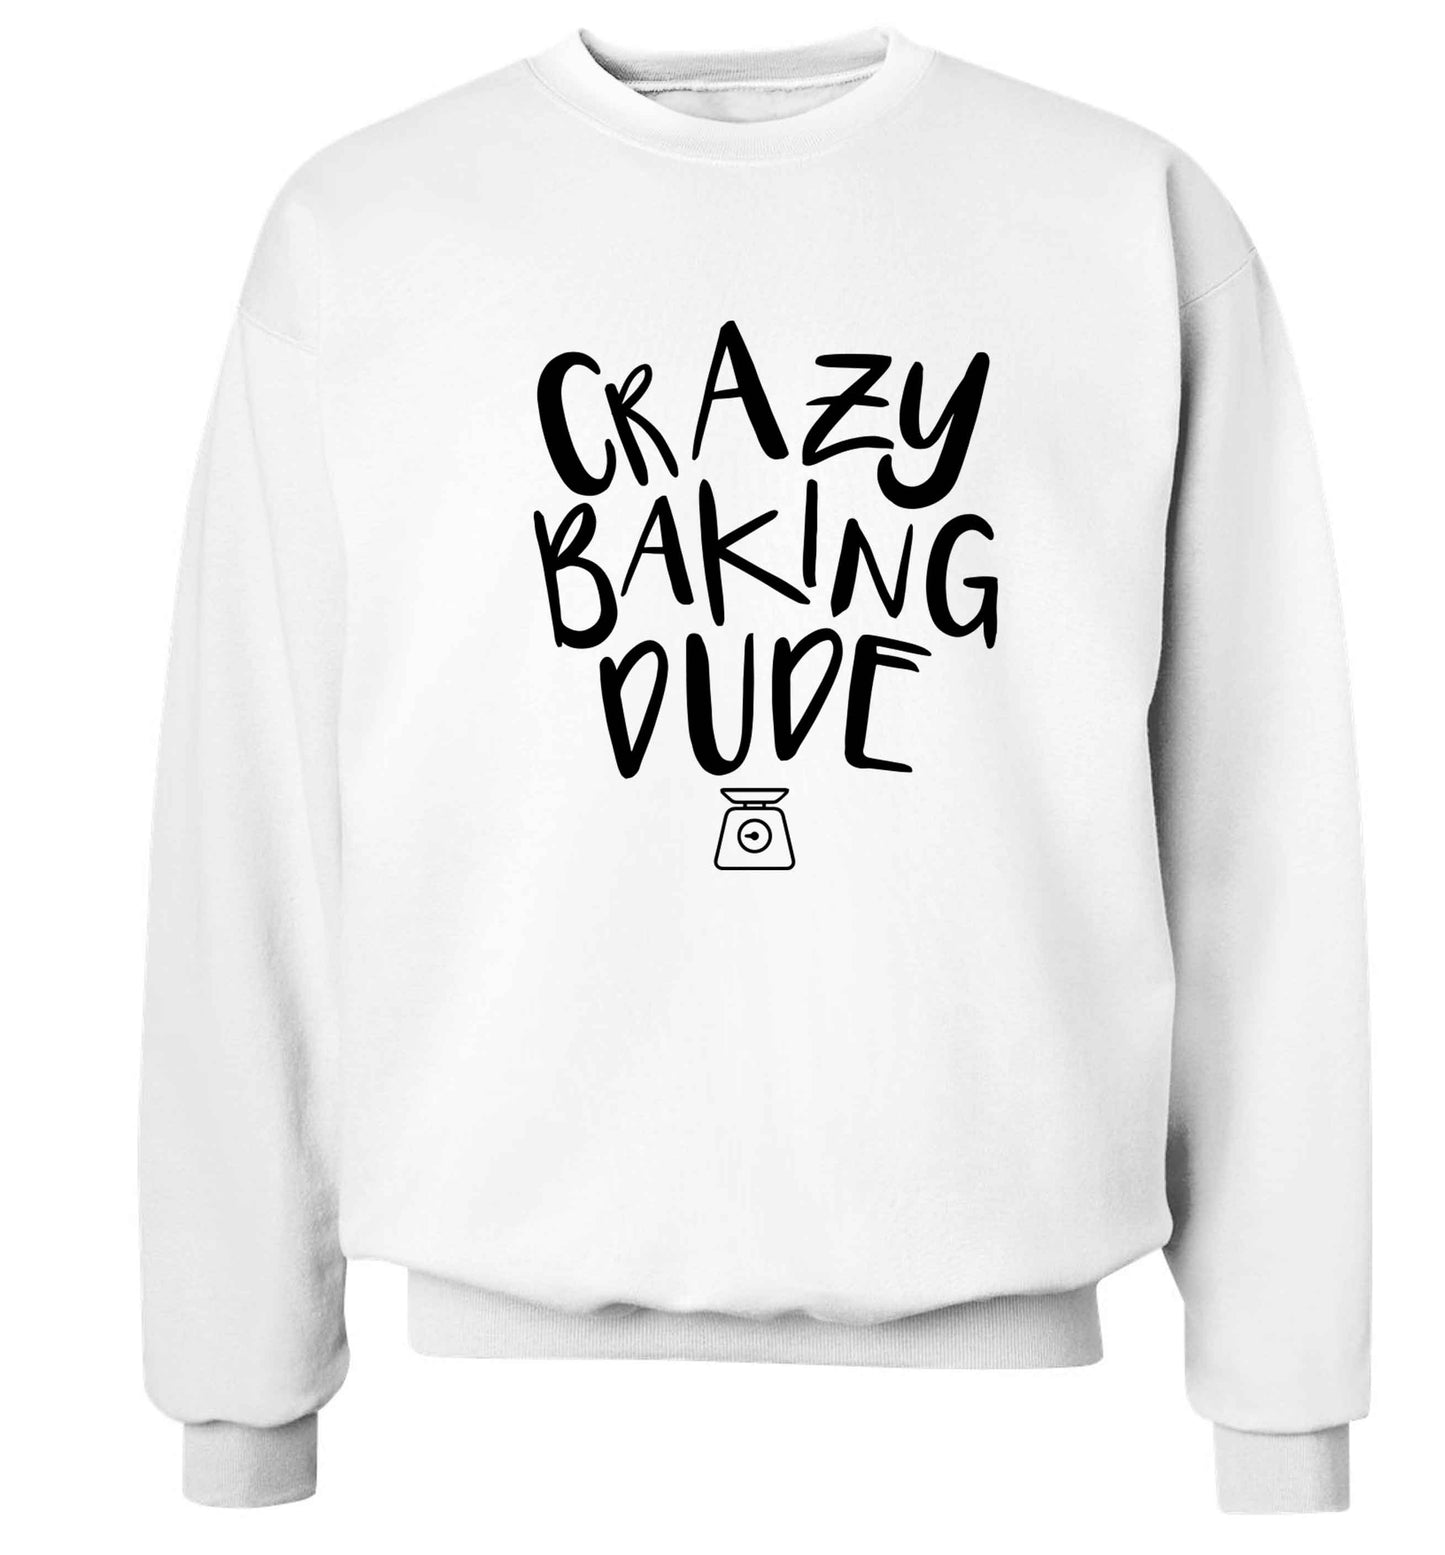 Crazy baking dude Adult's unisex white Sweater 2XL